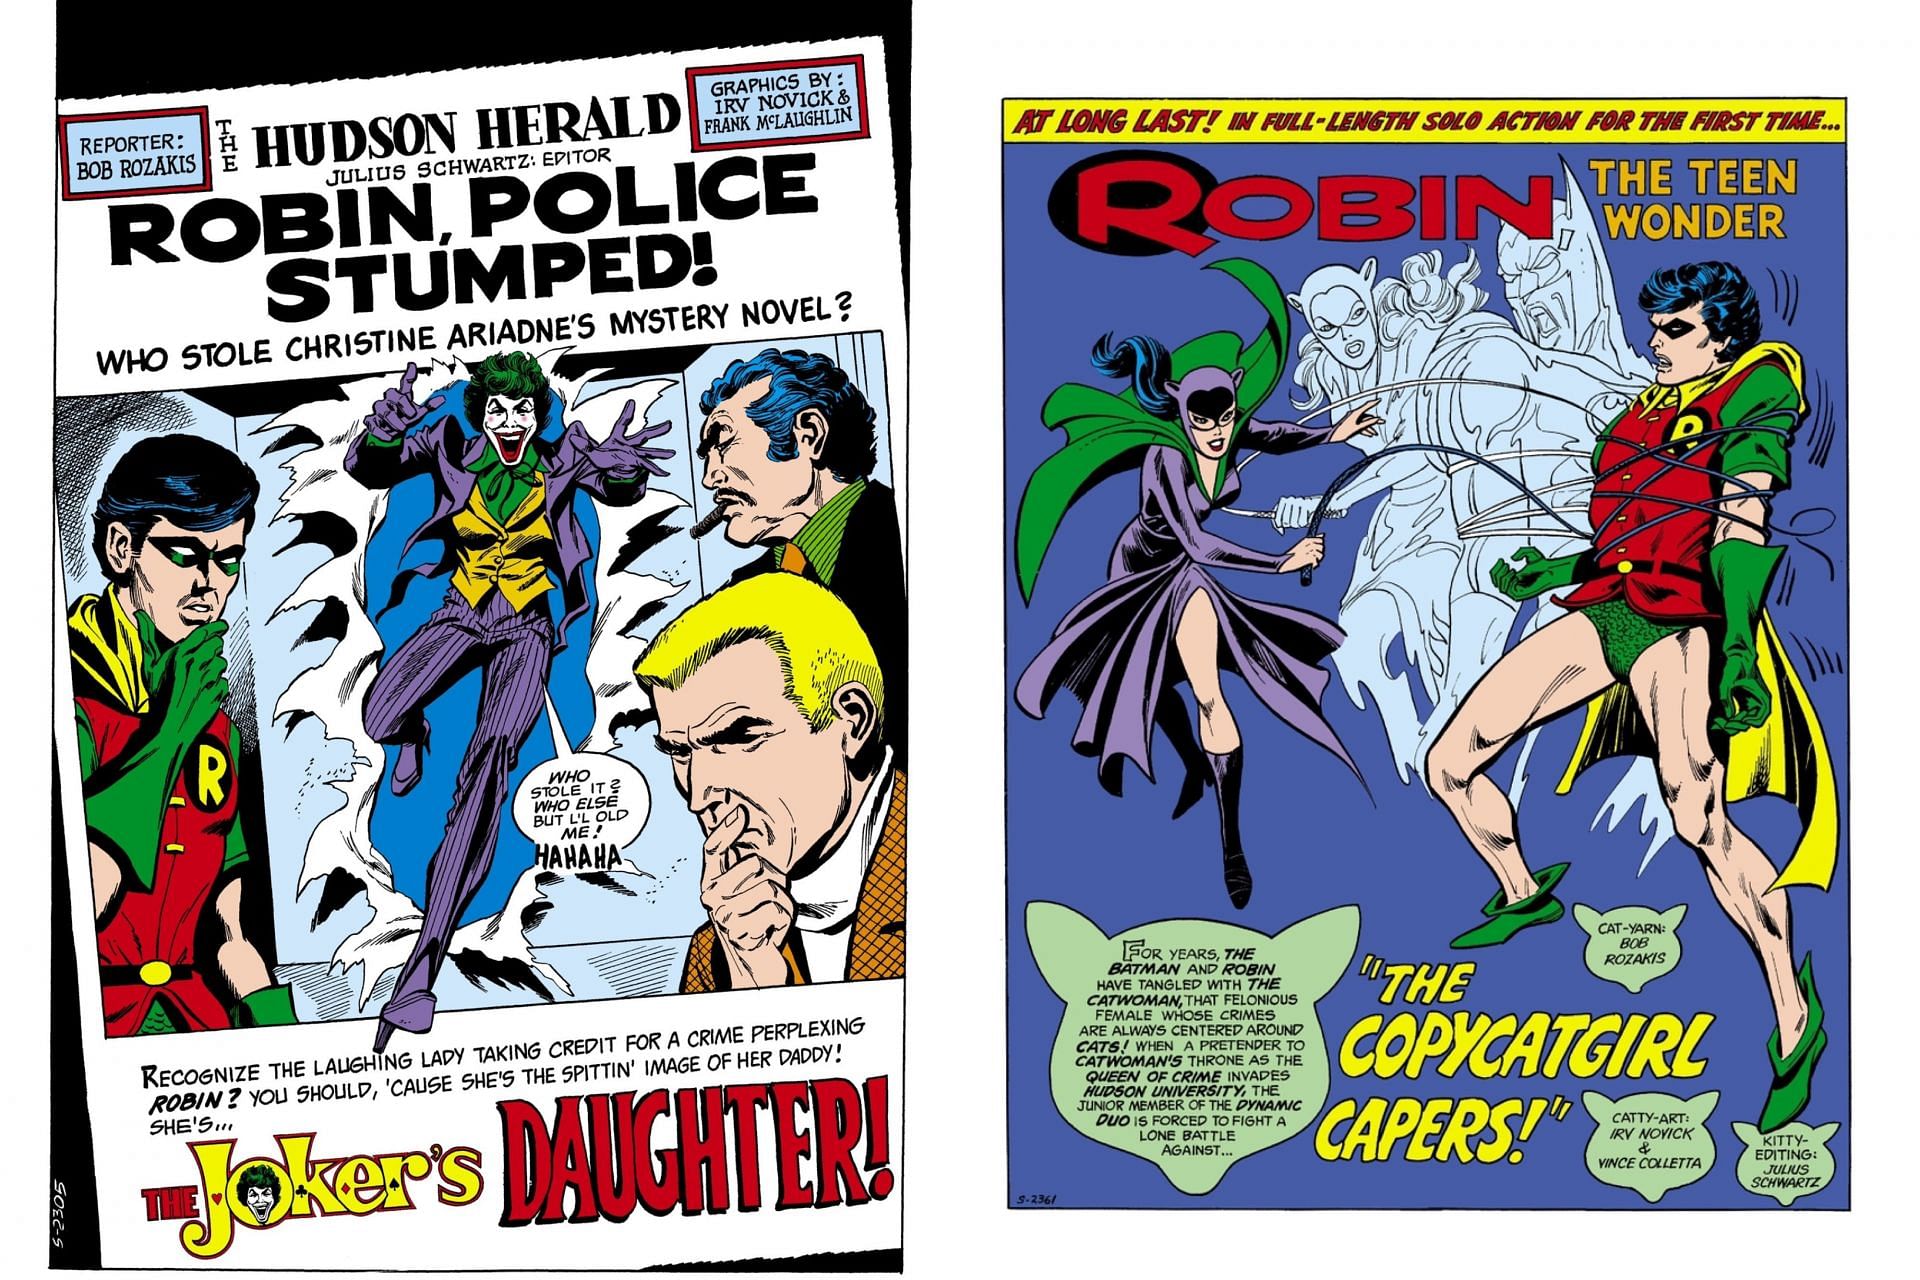 Batman Family Cover #6/ Batman Family Cover #8 (Images via DC Comics)